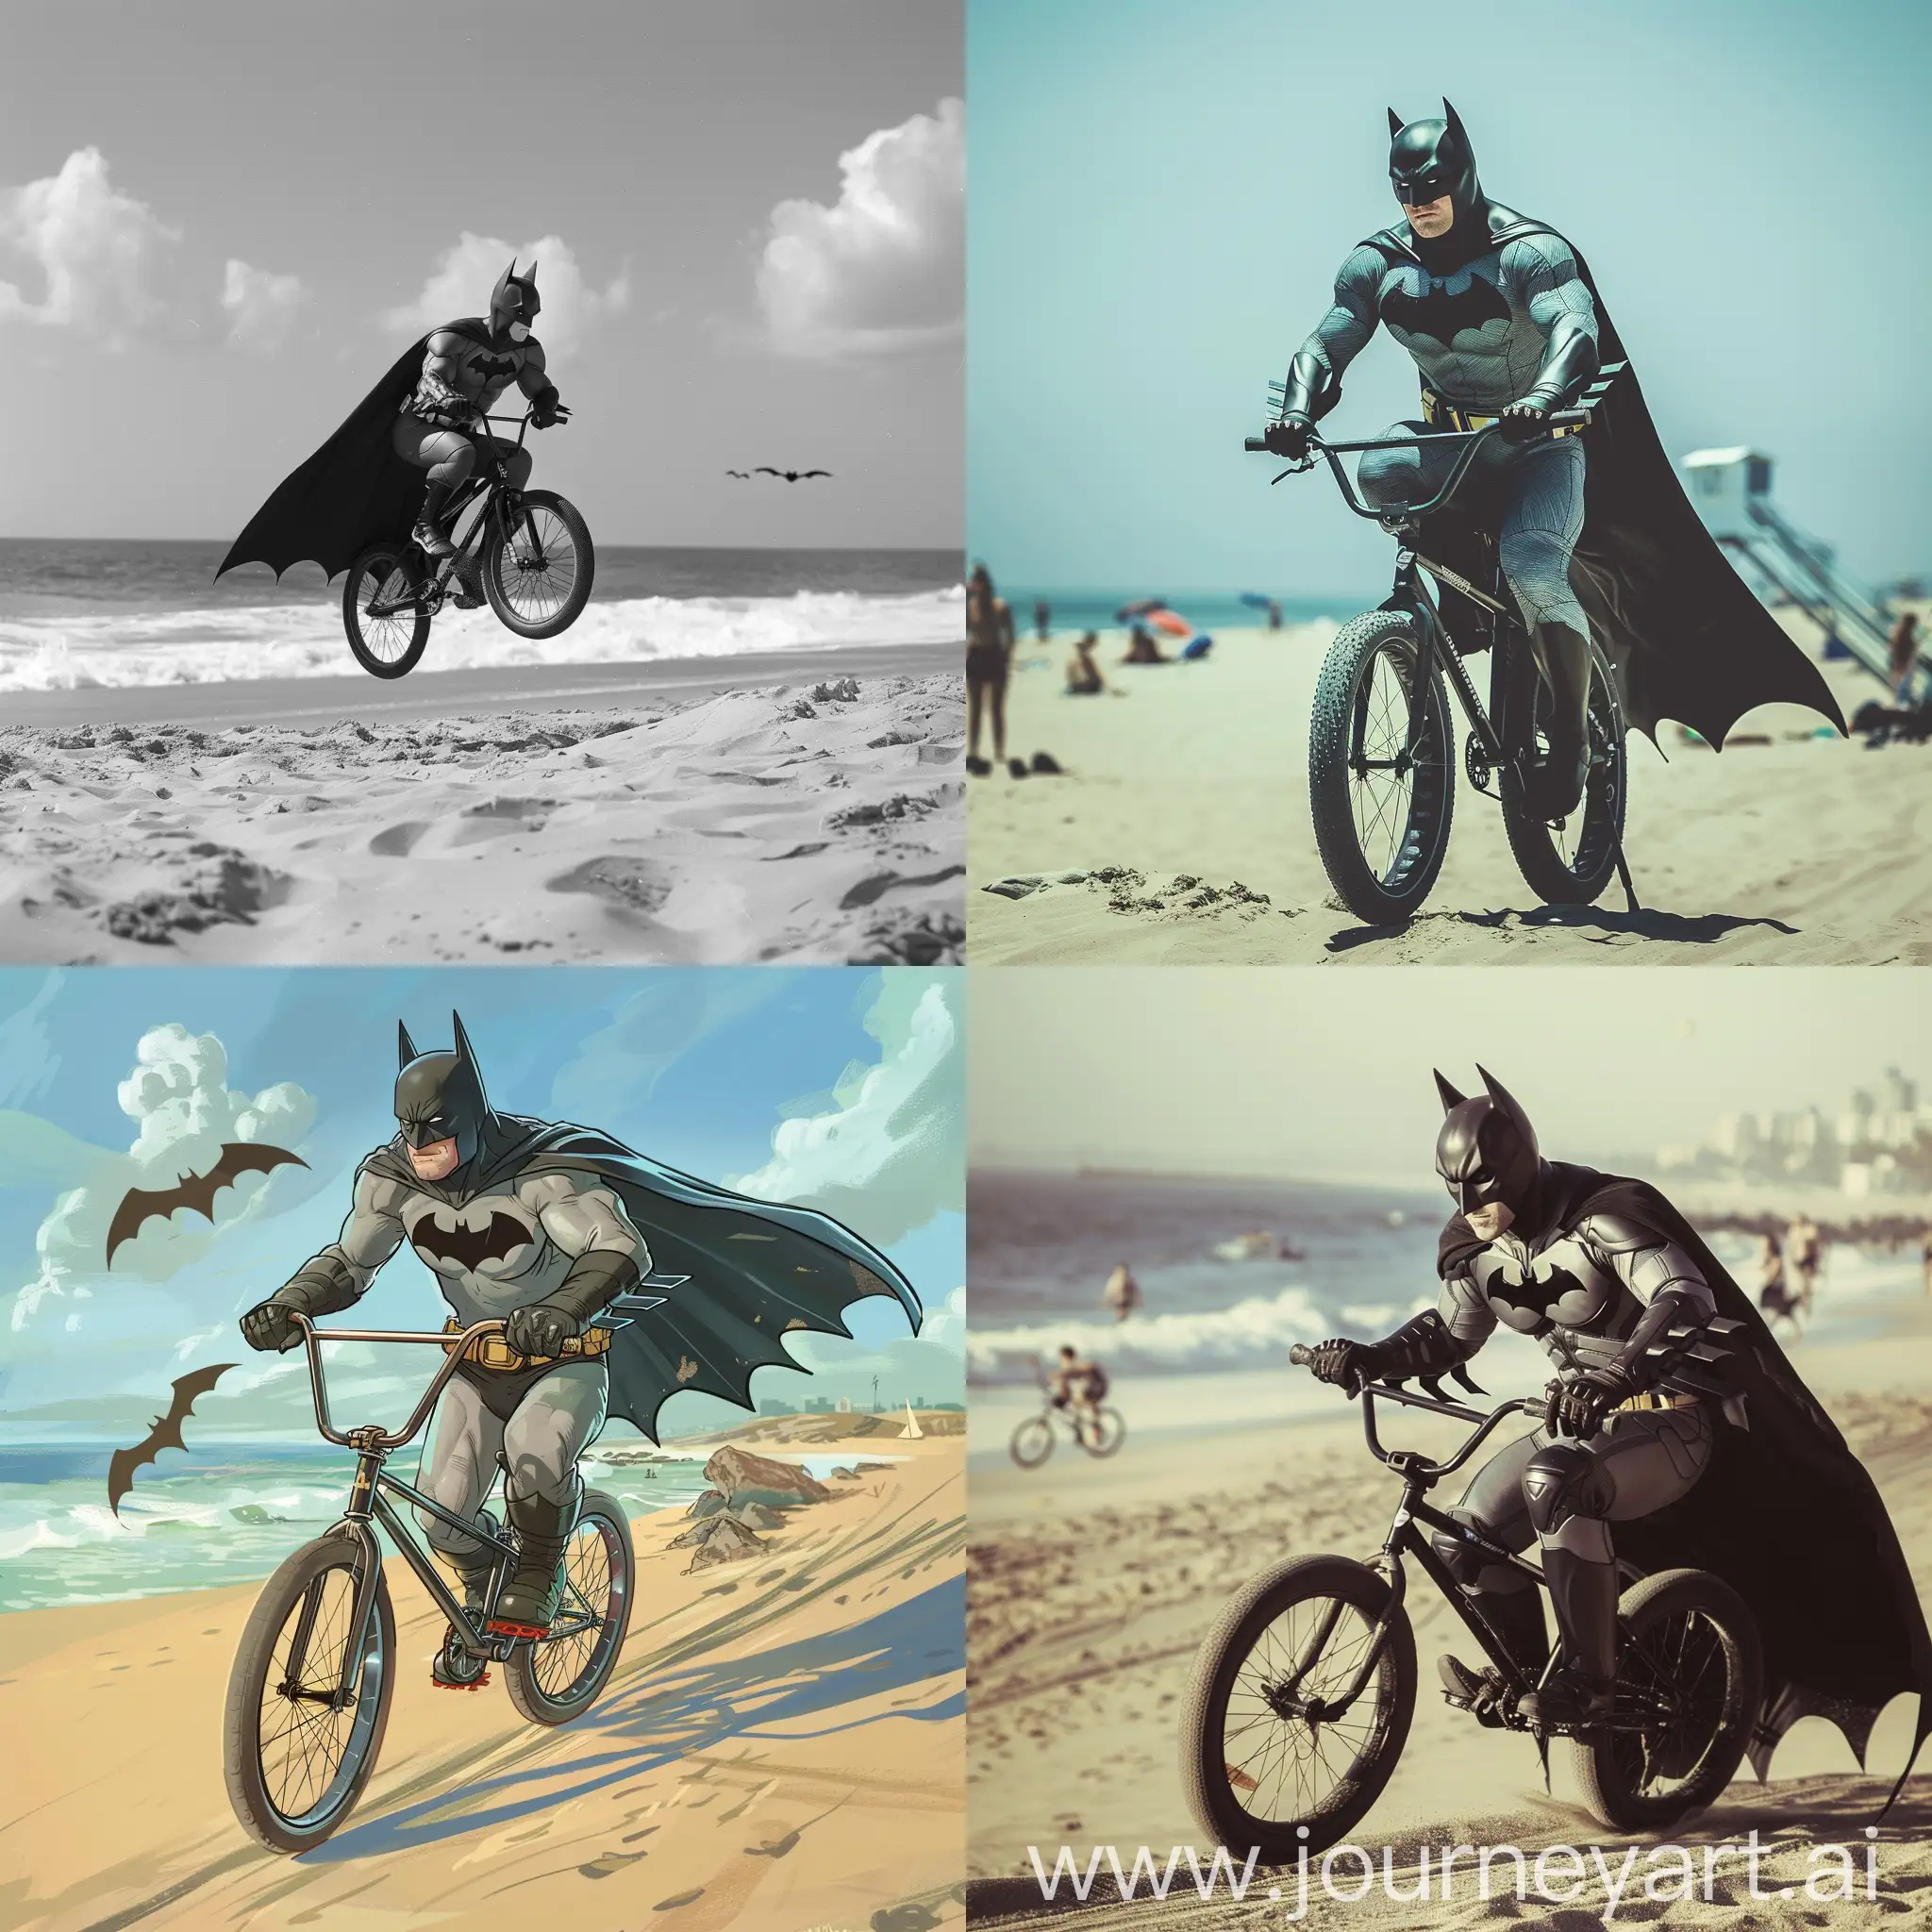 Batman-Cycling-Adventure-on-the-Beach